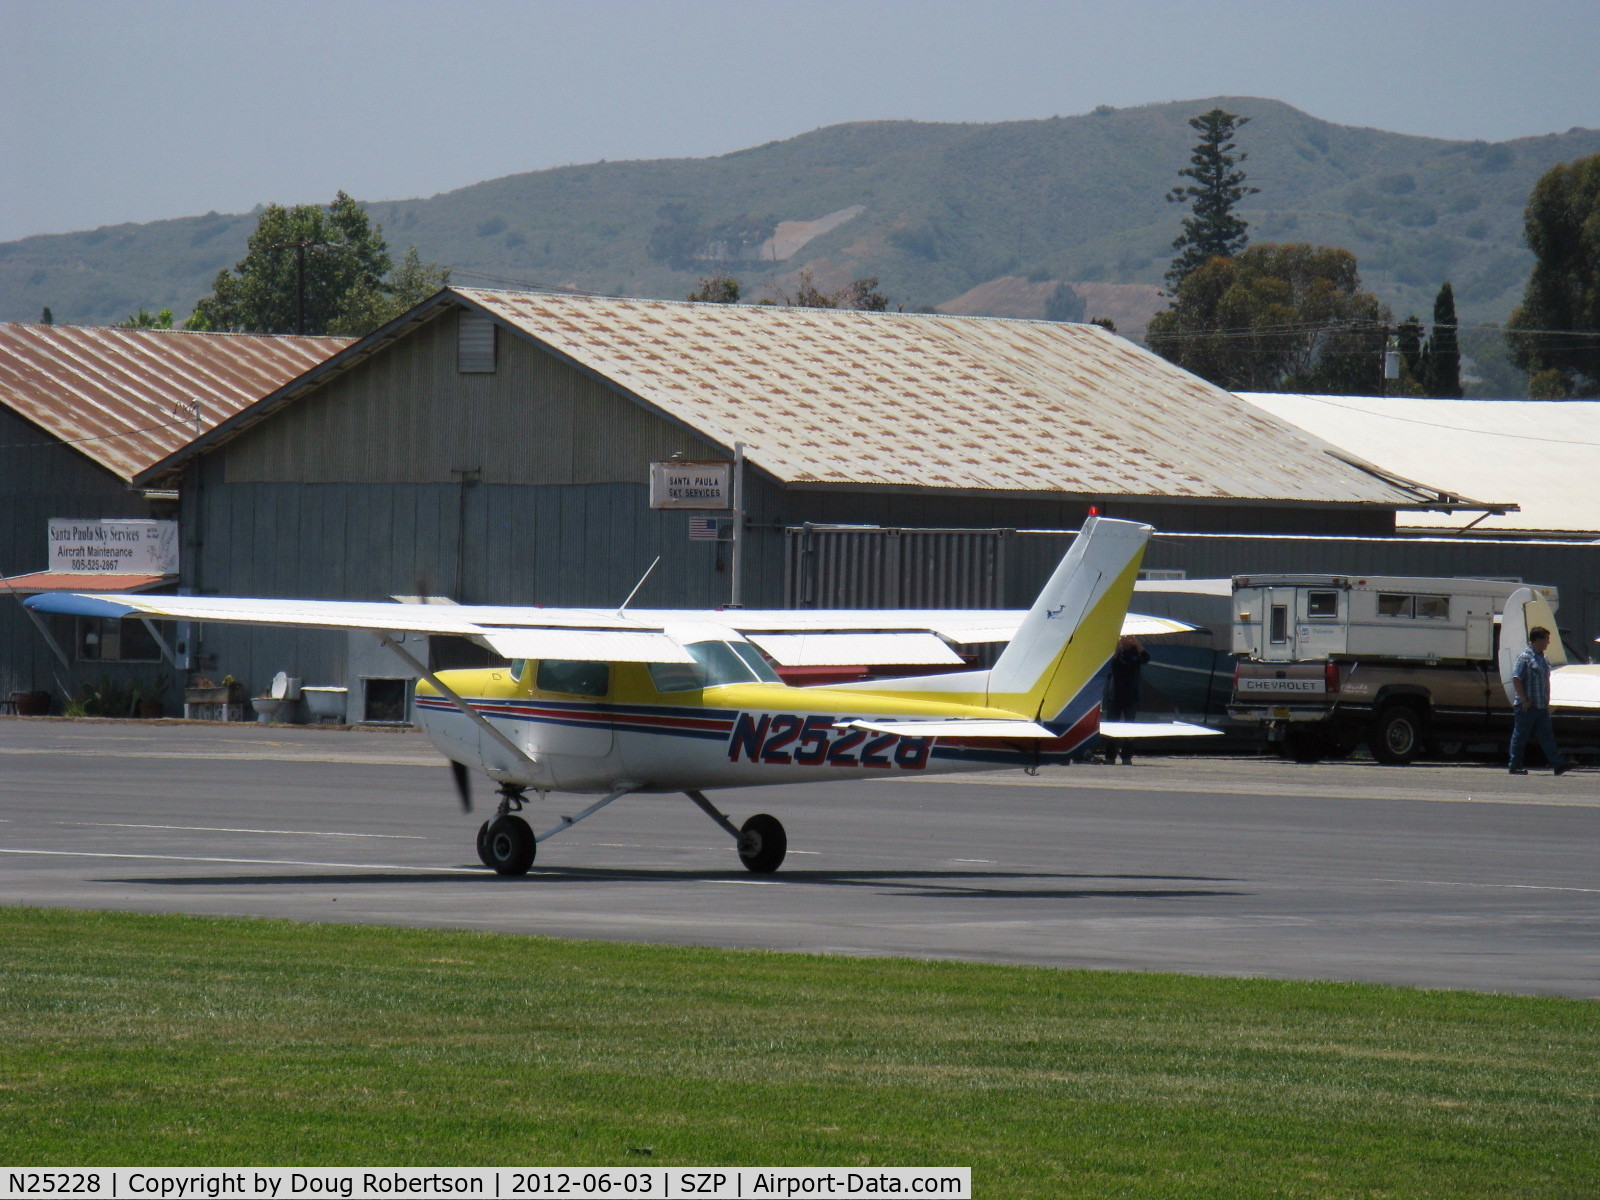 N25228, 1977 Cessna 152 C/N 15280543, 1977 Cessna 152, Lycoming O-235 108 Hp, landing roll Rwy 22